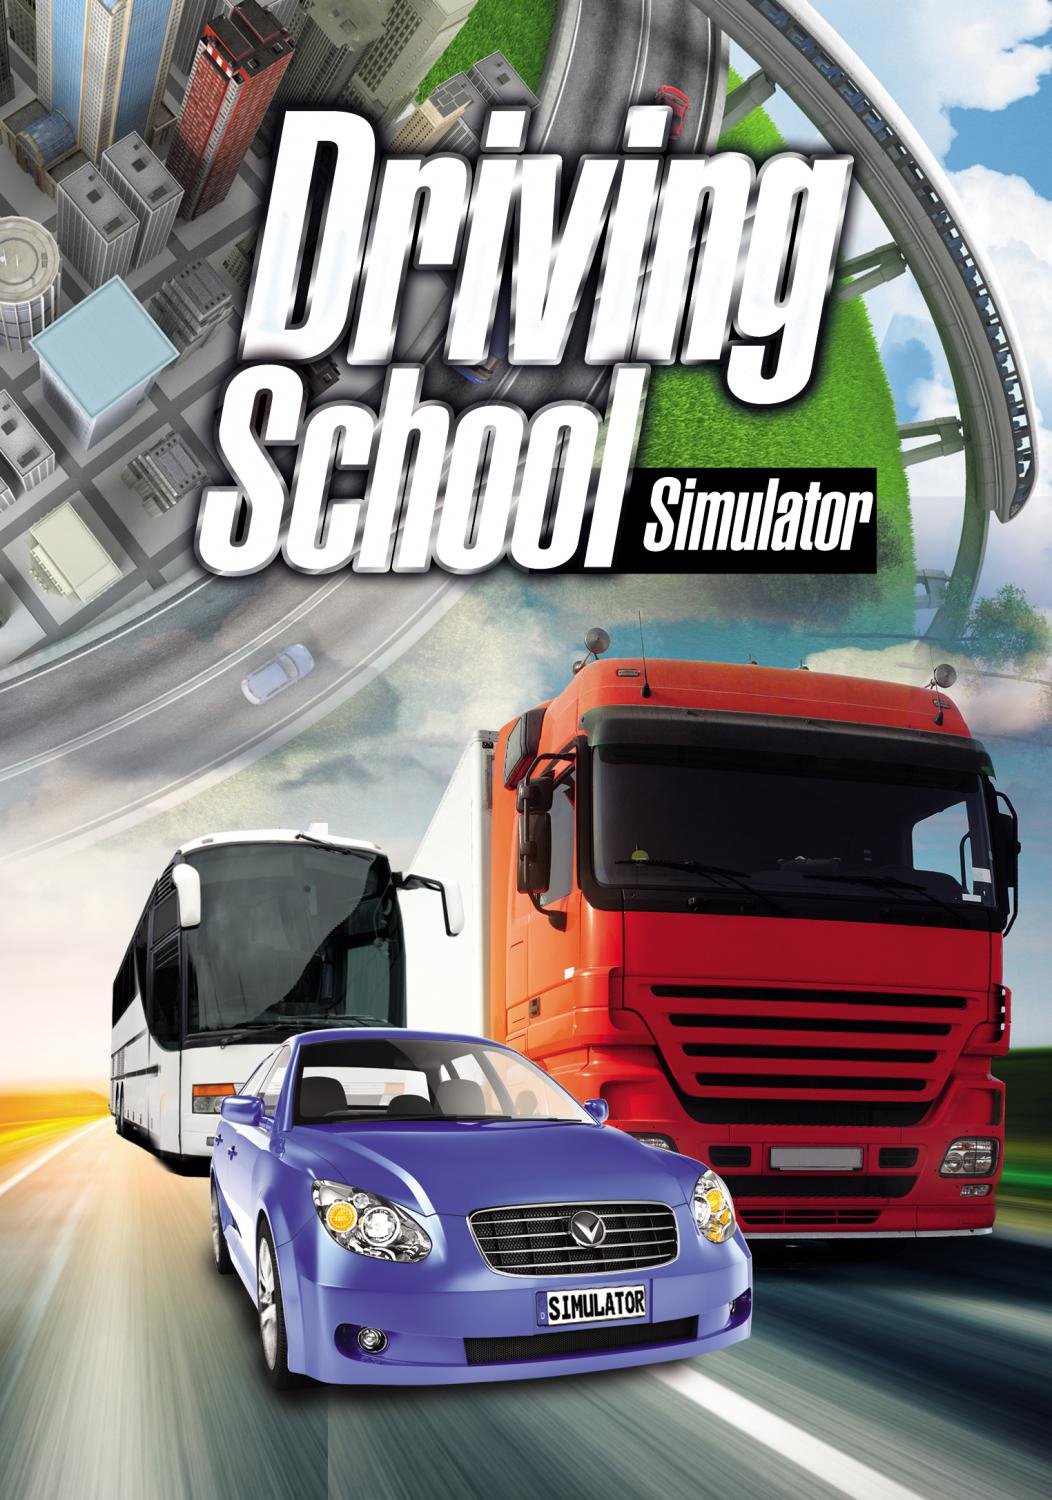 3d driving school simulator pc free download 5.1 europe edition full